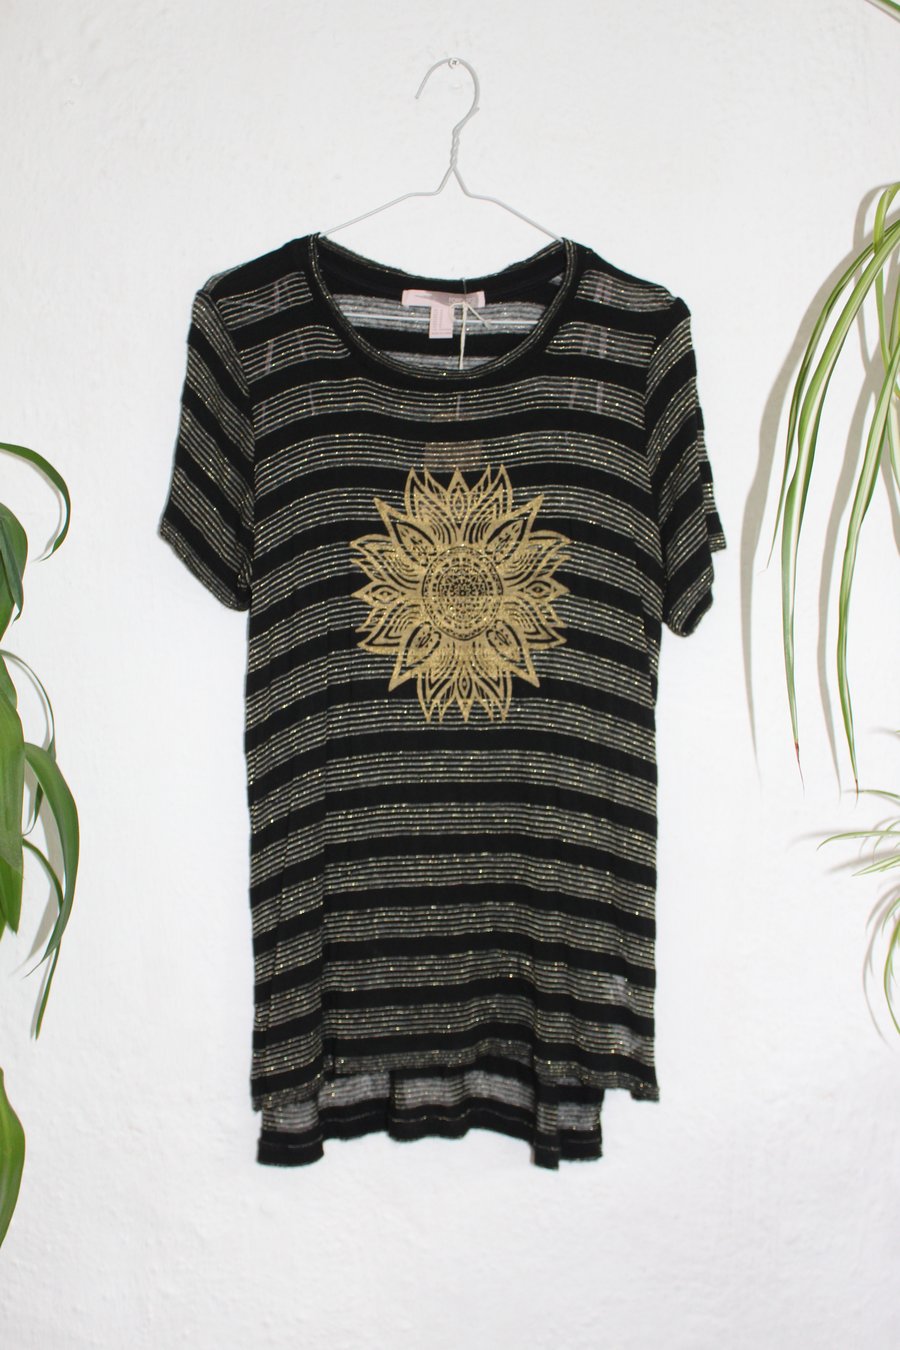 Black and gold T shirt cotton,reworked Eco gold mandala print, ladies size M 